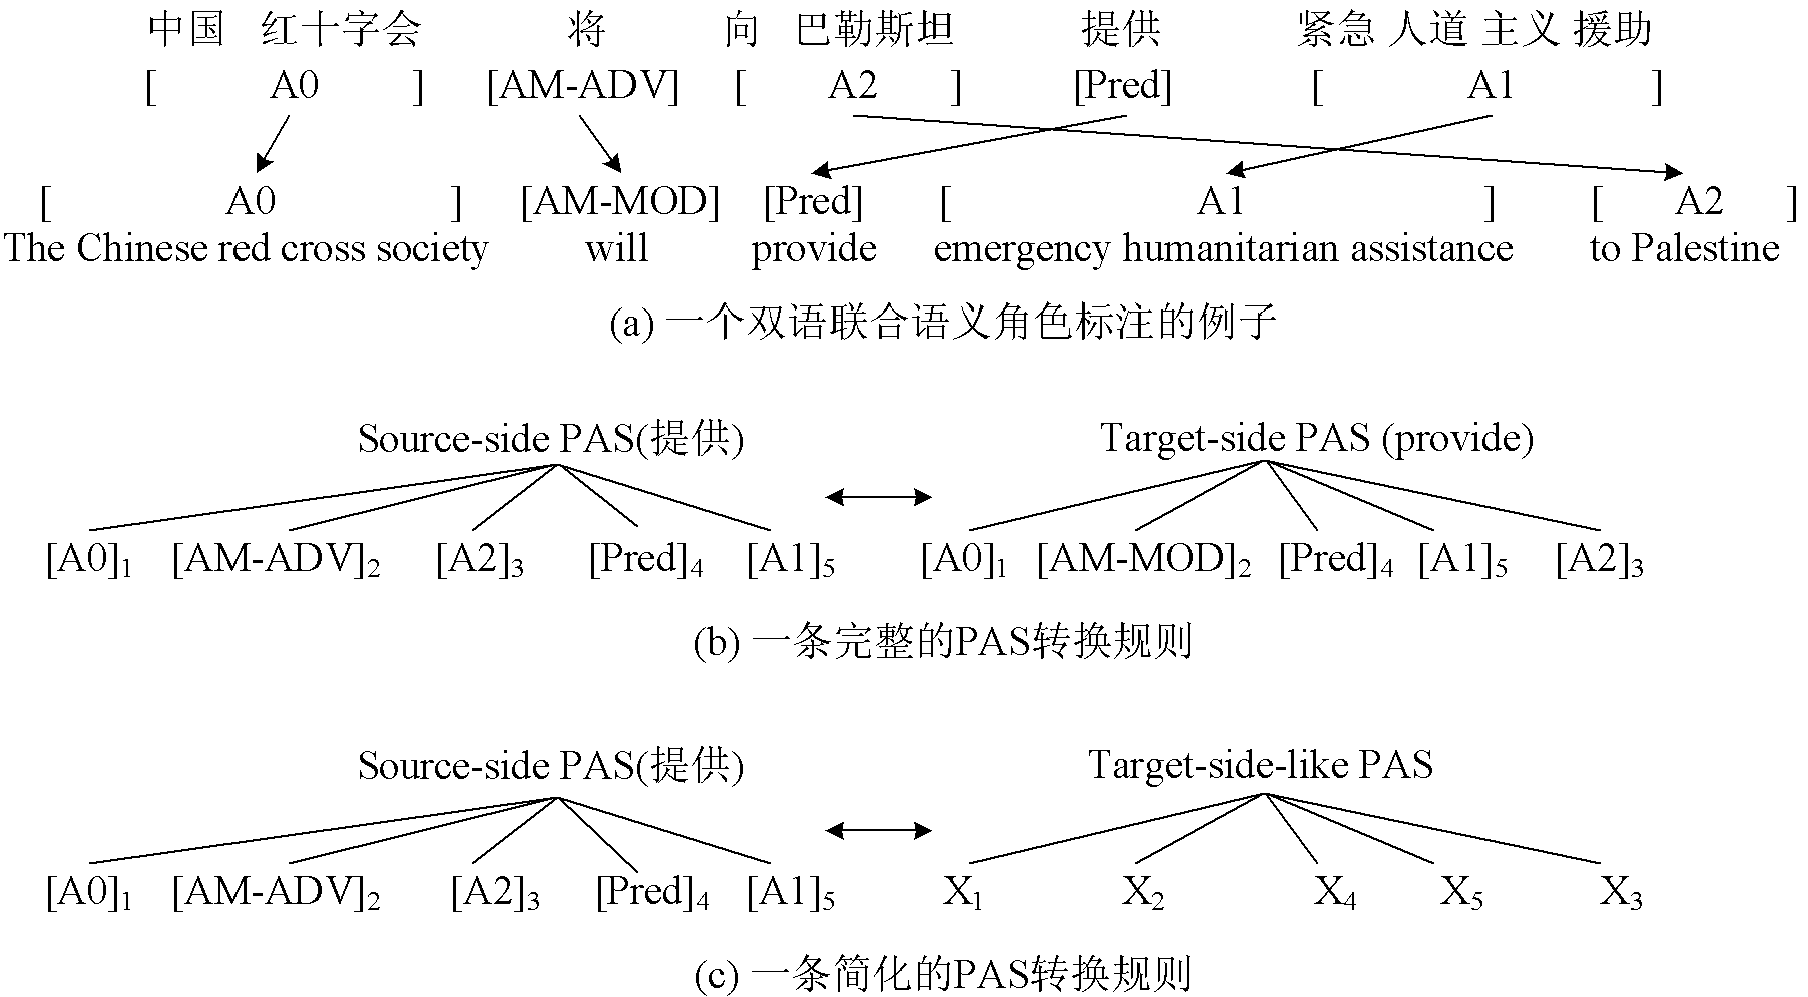 Statistical machine translation method based on predicate argument structure (PAS)